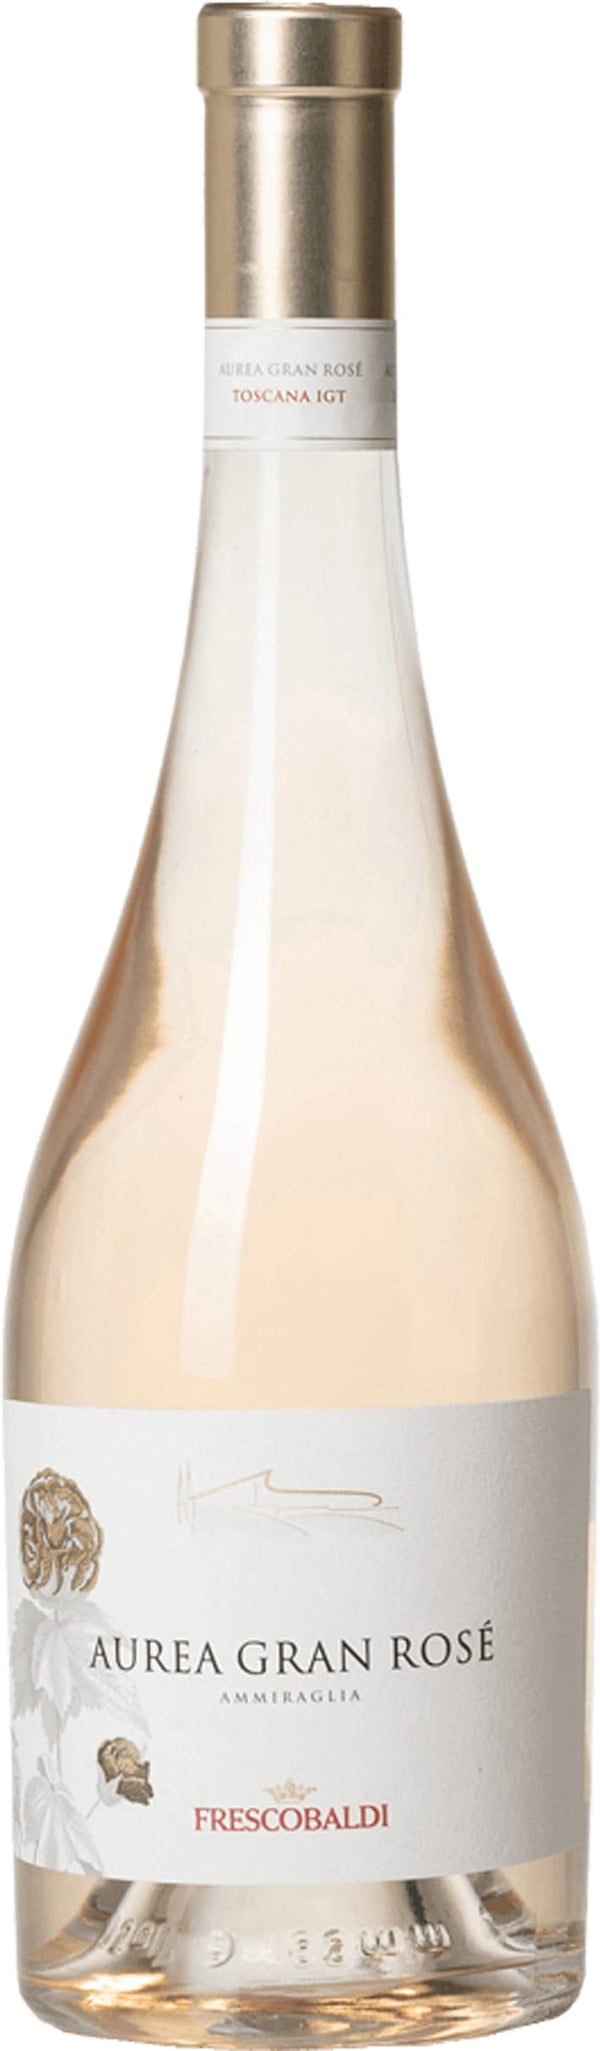 Frescobaldi Ammiraglia, Aurea Gran Rose 2020 6x75cl - Just Wines 